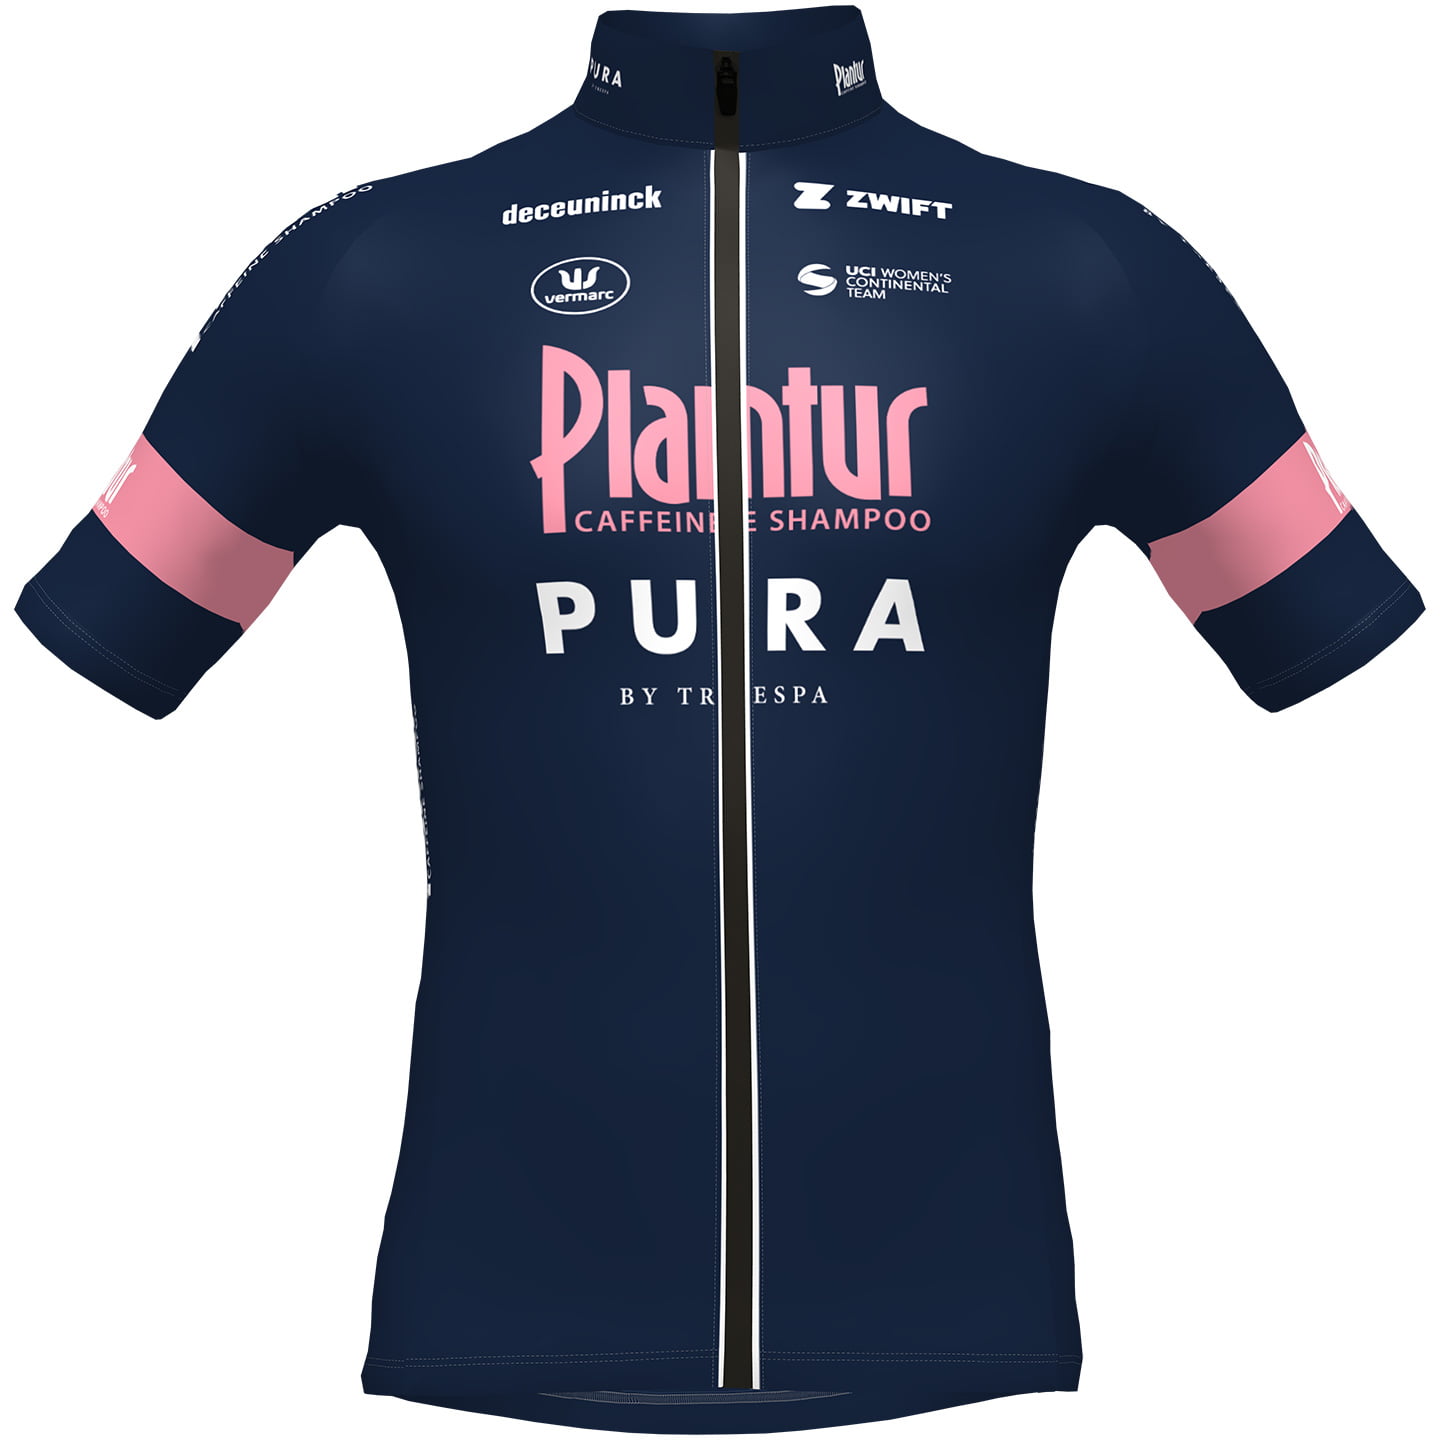 PLANTUR-PURA 2022 Short Sleeve Jersey, for men, size 2XL, Cycle shirt, Bike gear